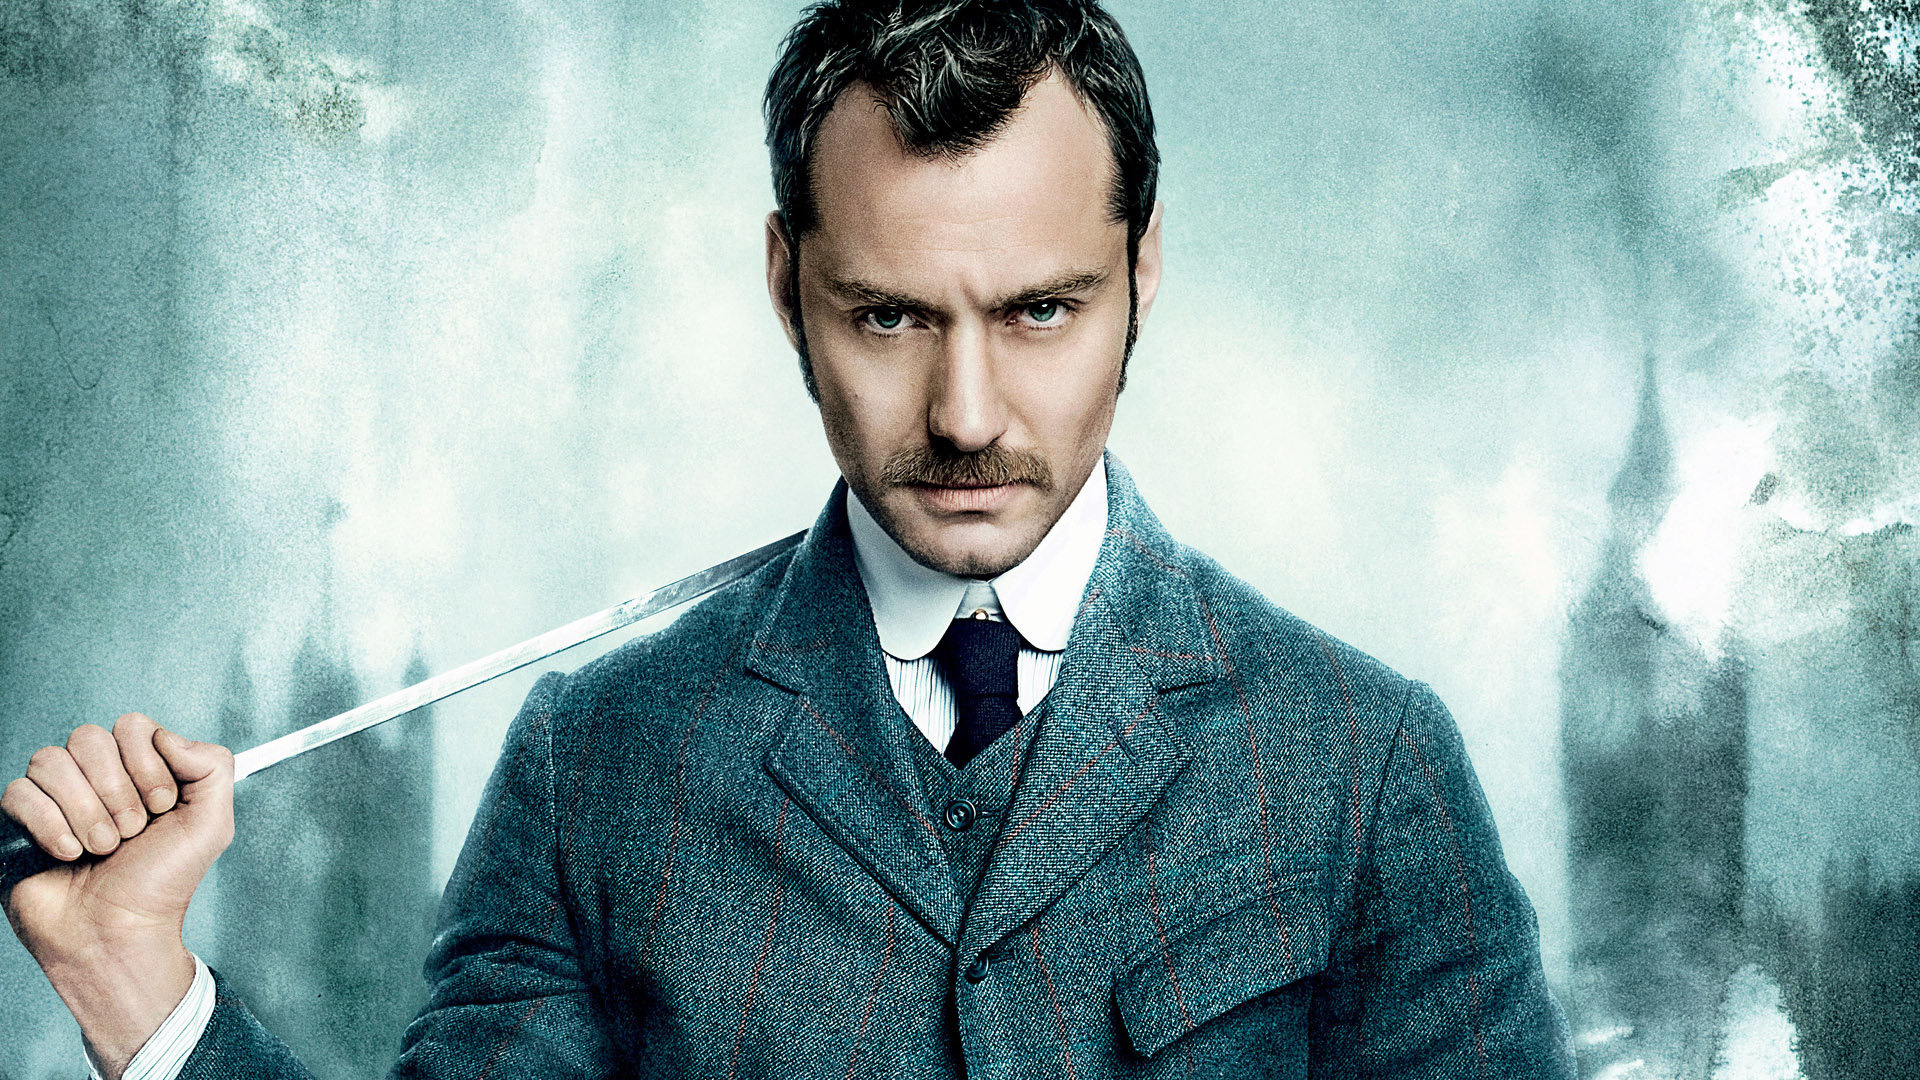 Sherlock Holmes movie, Full HD download, Desktop background, Exquisite cinematography, 1920x1080 Full HD Desktop